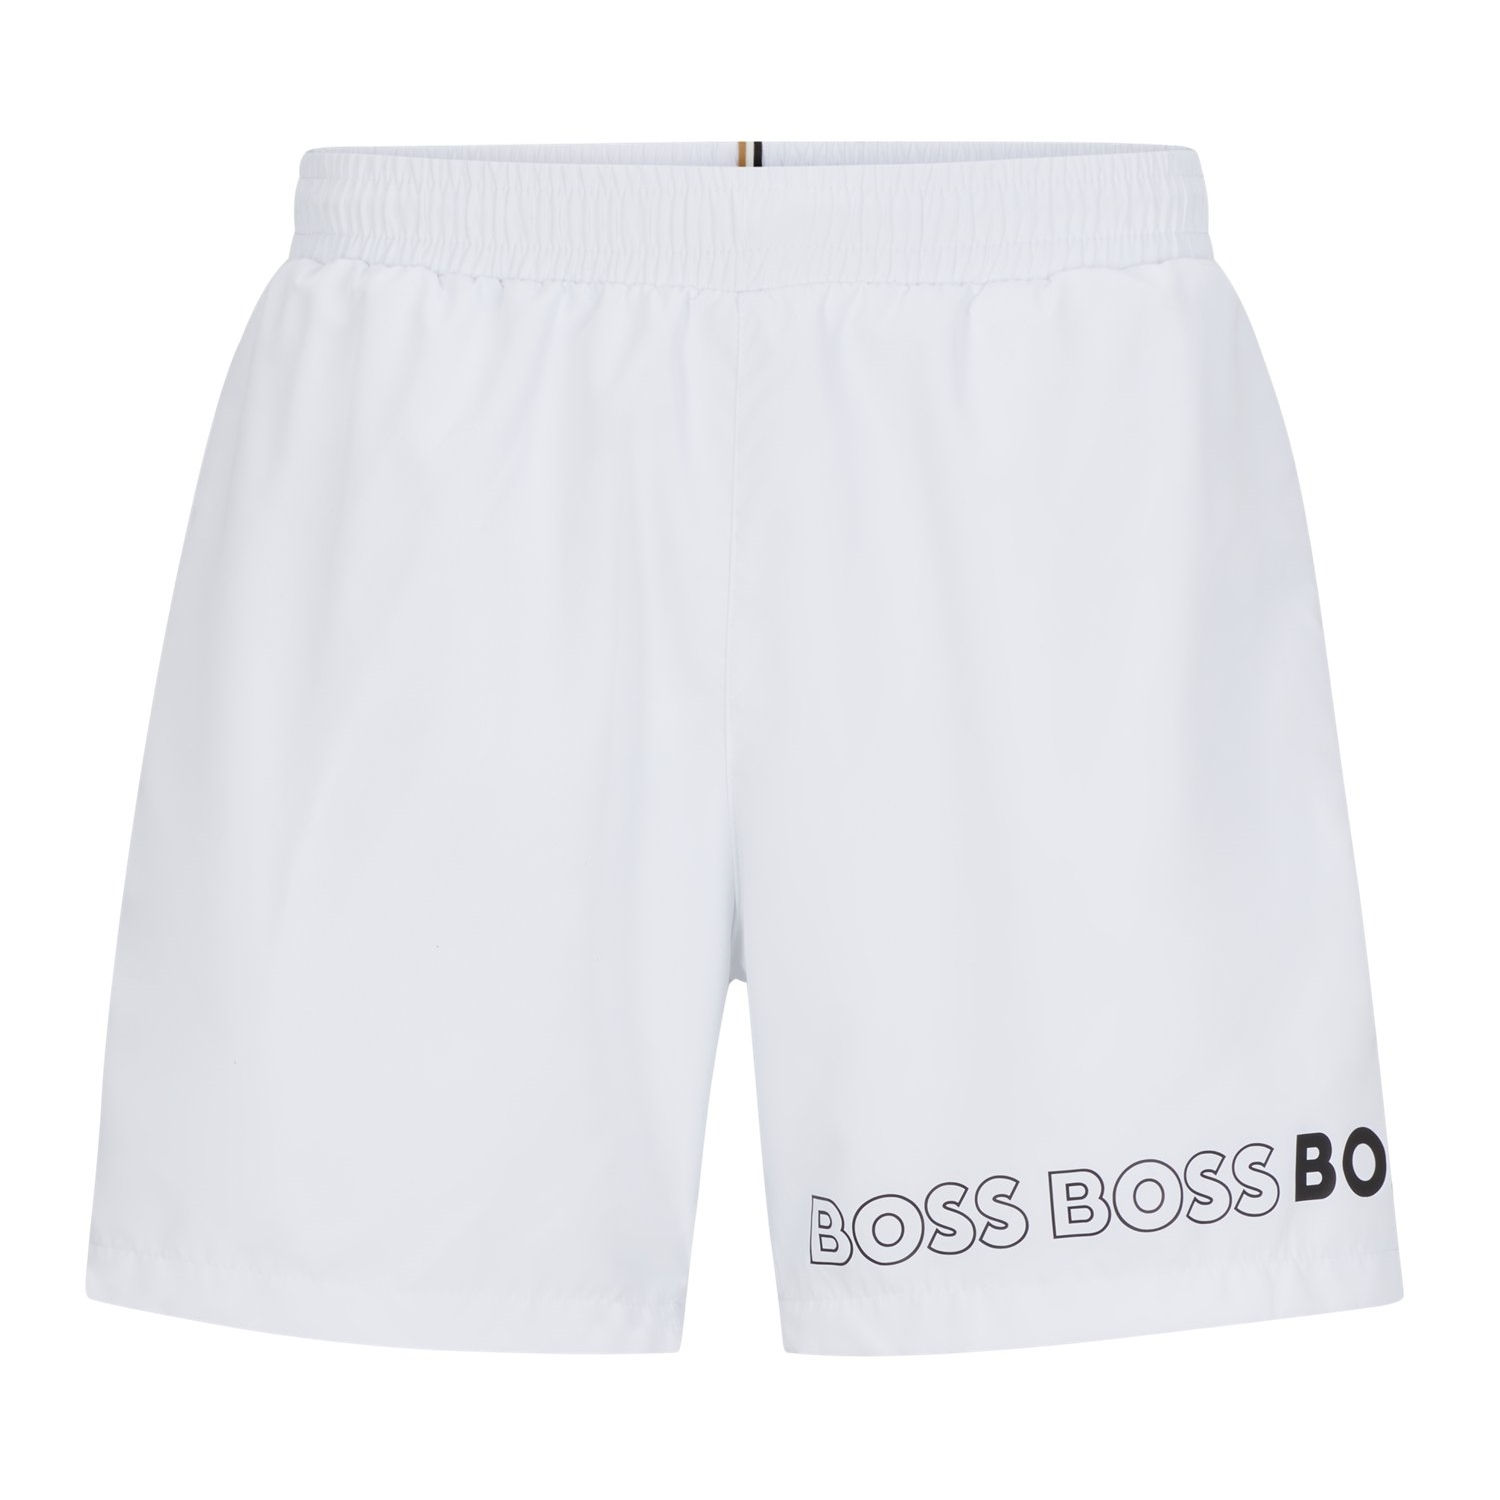 Купальные шорты Hugo Boss With Repeat Logos, белый купальные шорты hugo boss with repeat logos красный